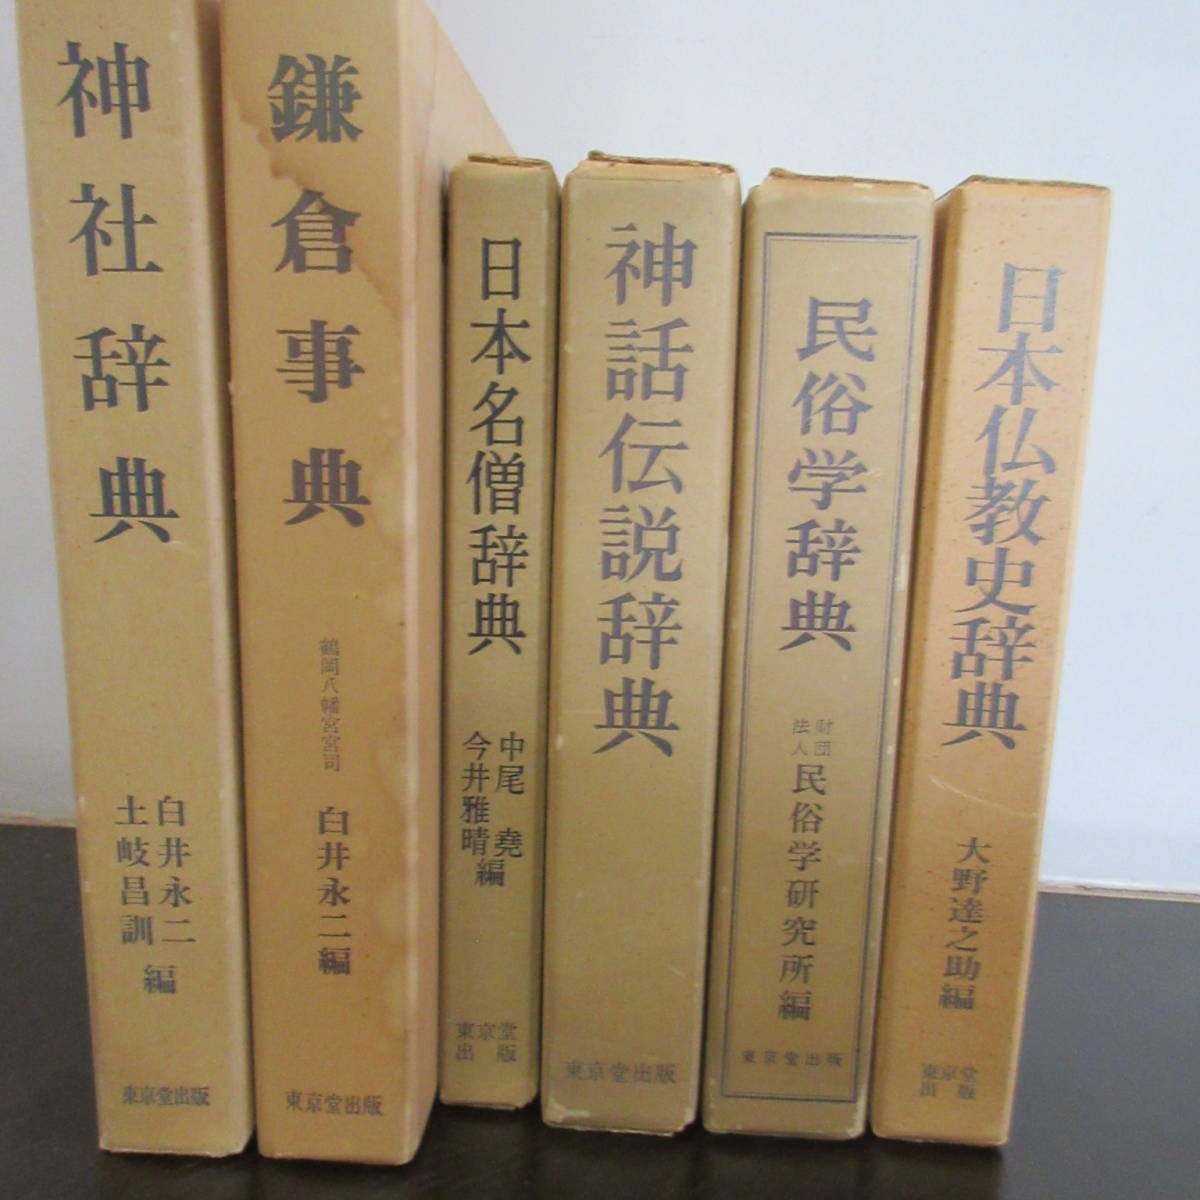 Dictionary Encyclopedia "Japanese Buddhist History Dictionary", "Folklore Dictionary", "Myths Legendary Dictionary", "Japanese Famous Monk Dictionary", "Kamakura Encyclopedia", "Shrine Dictionary" Tokyo -do Publishing